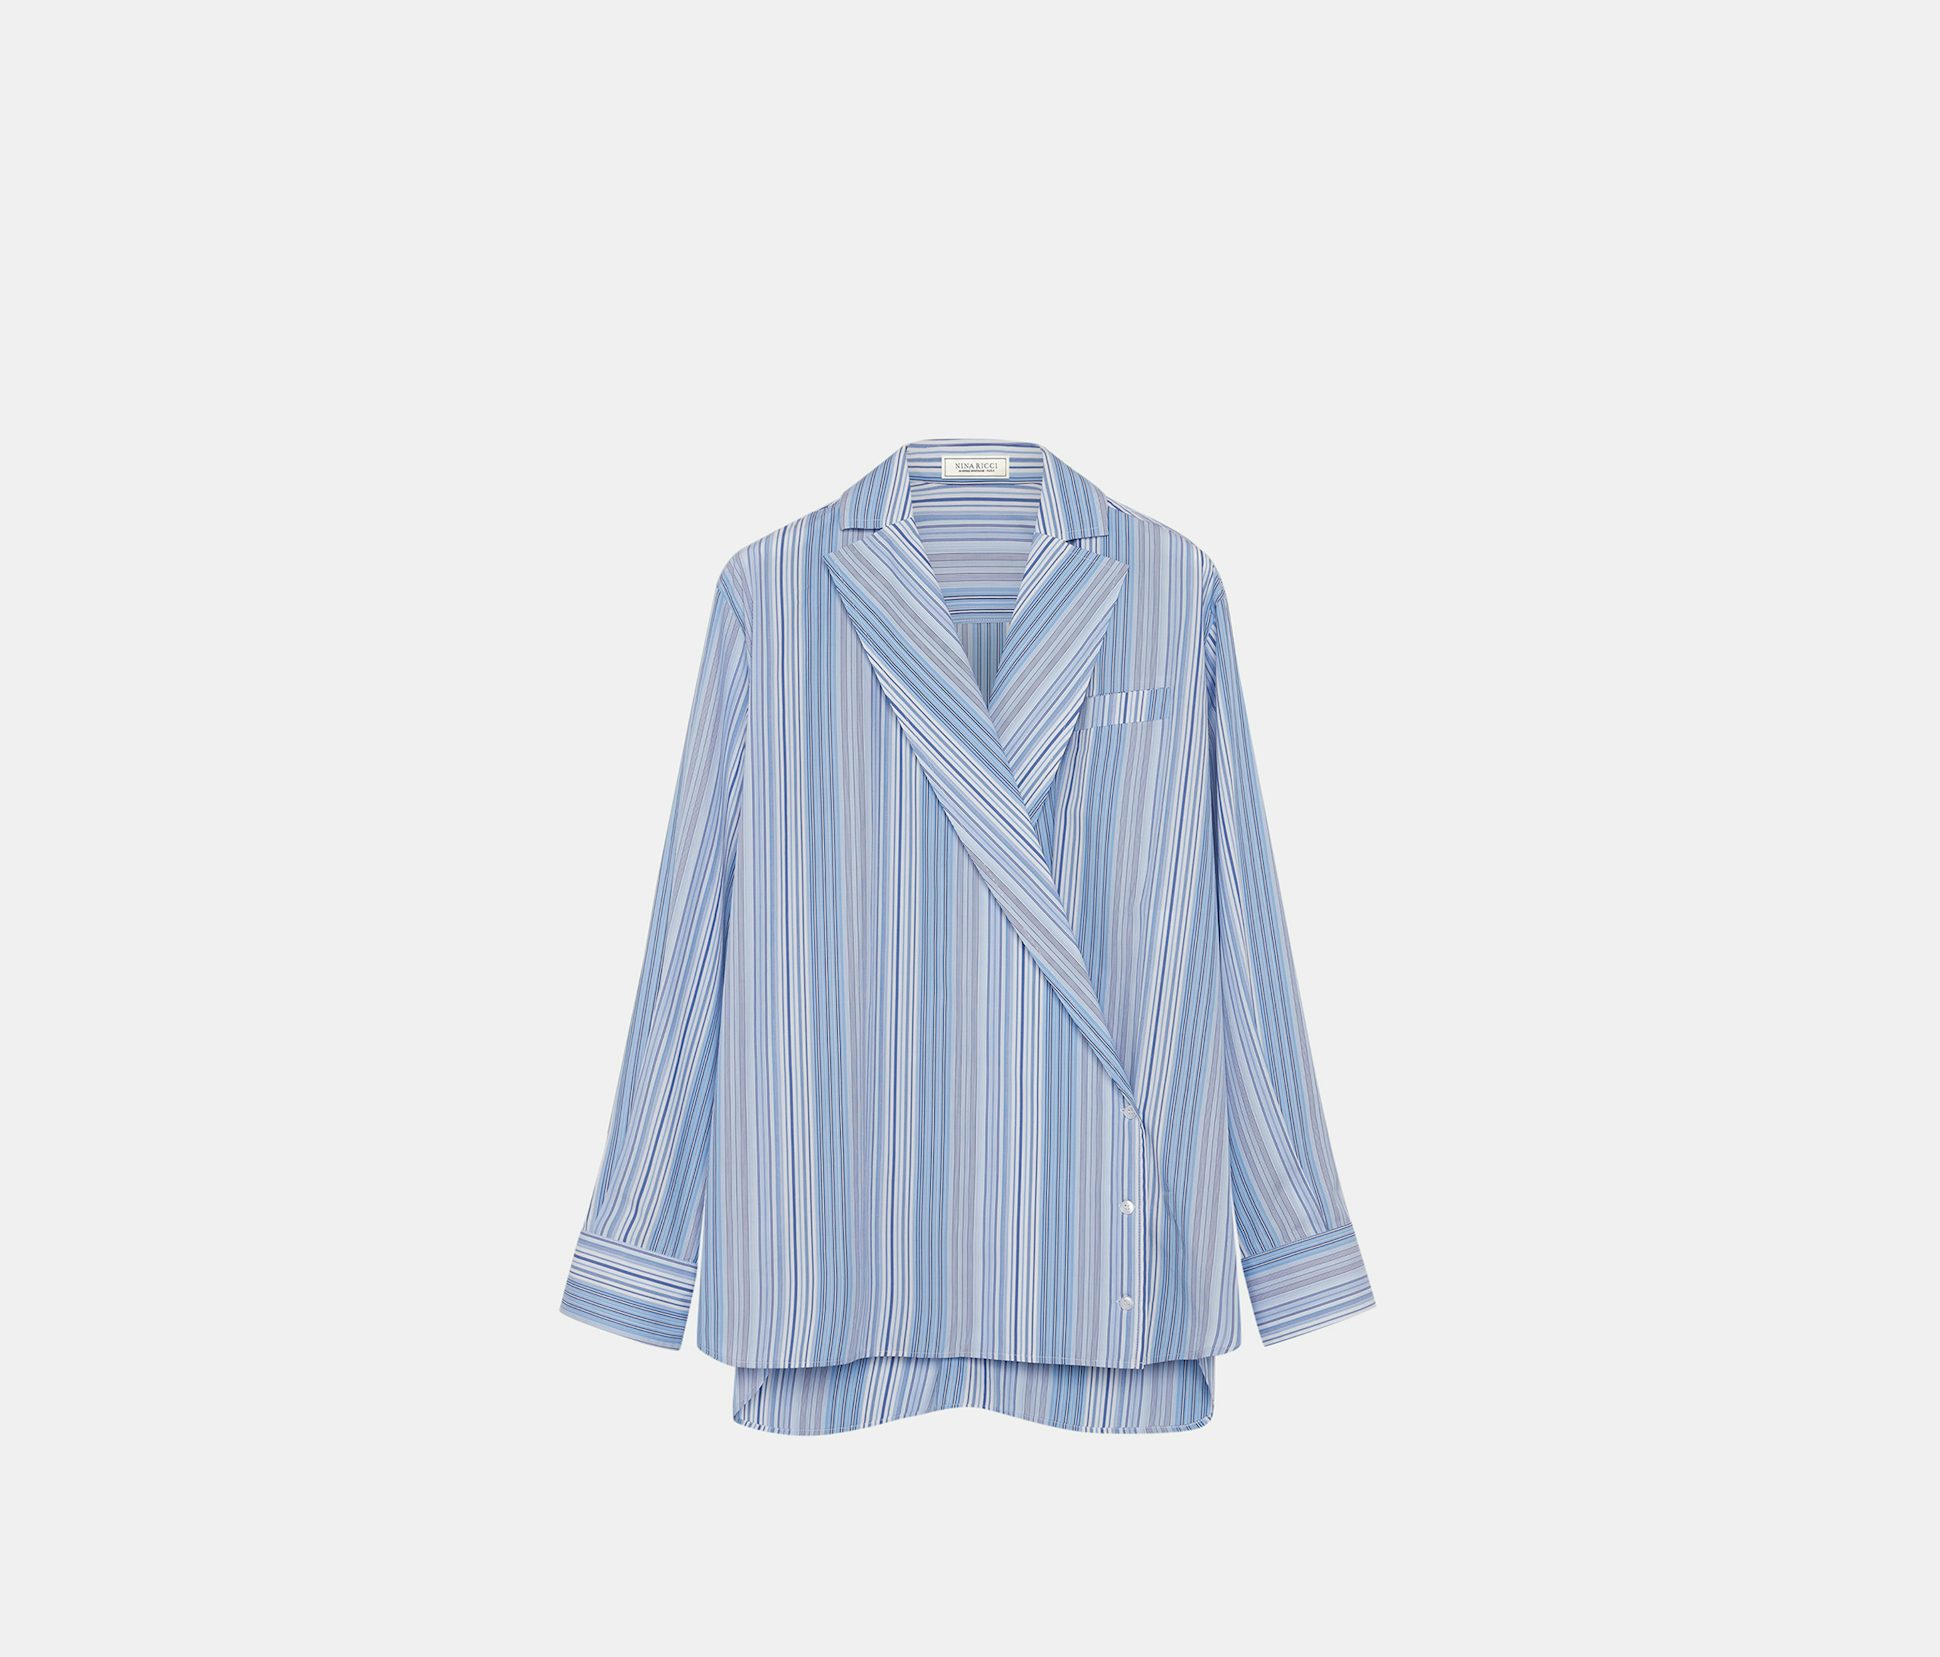 Criss-cross blue striped blouse - Nina Ricci